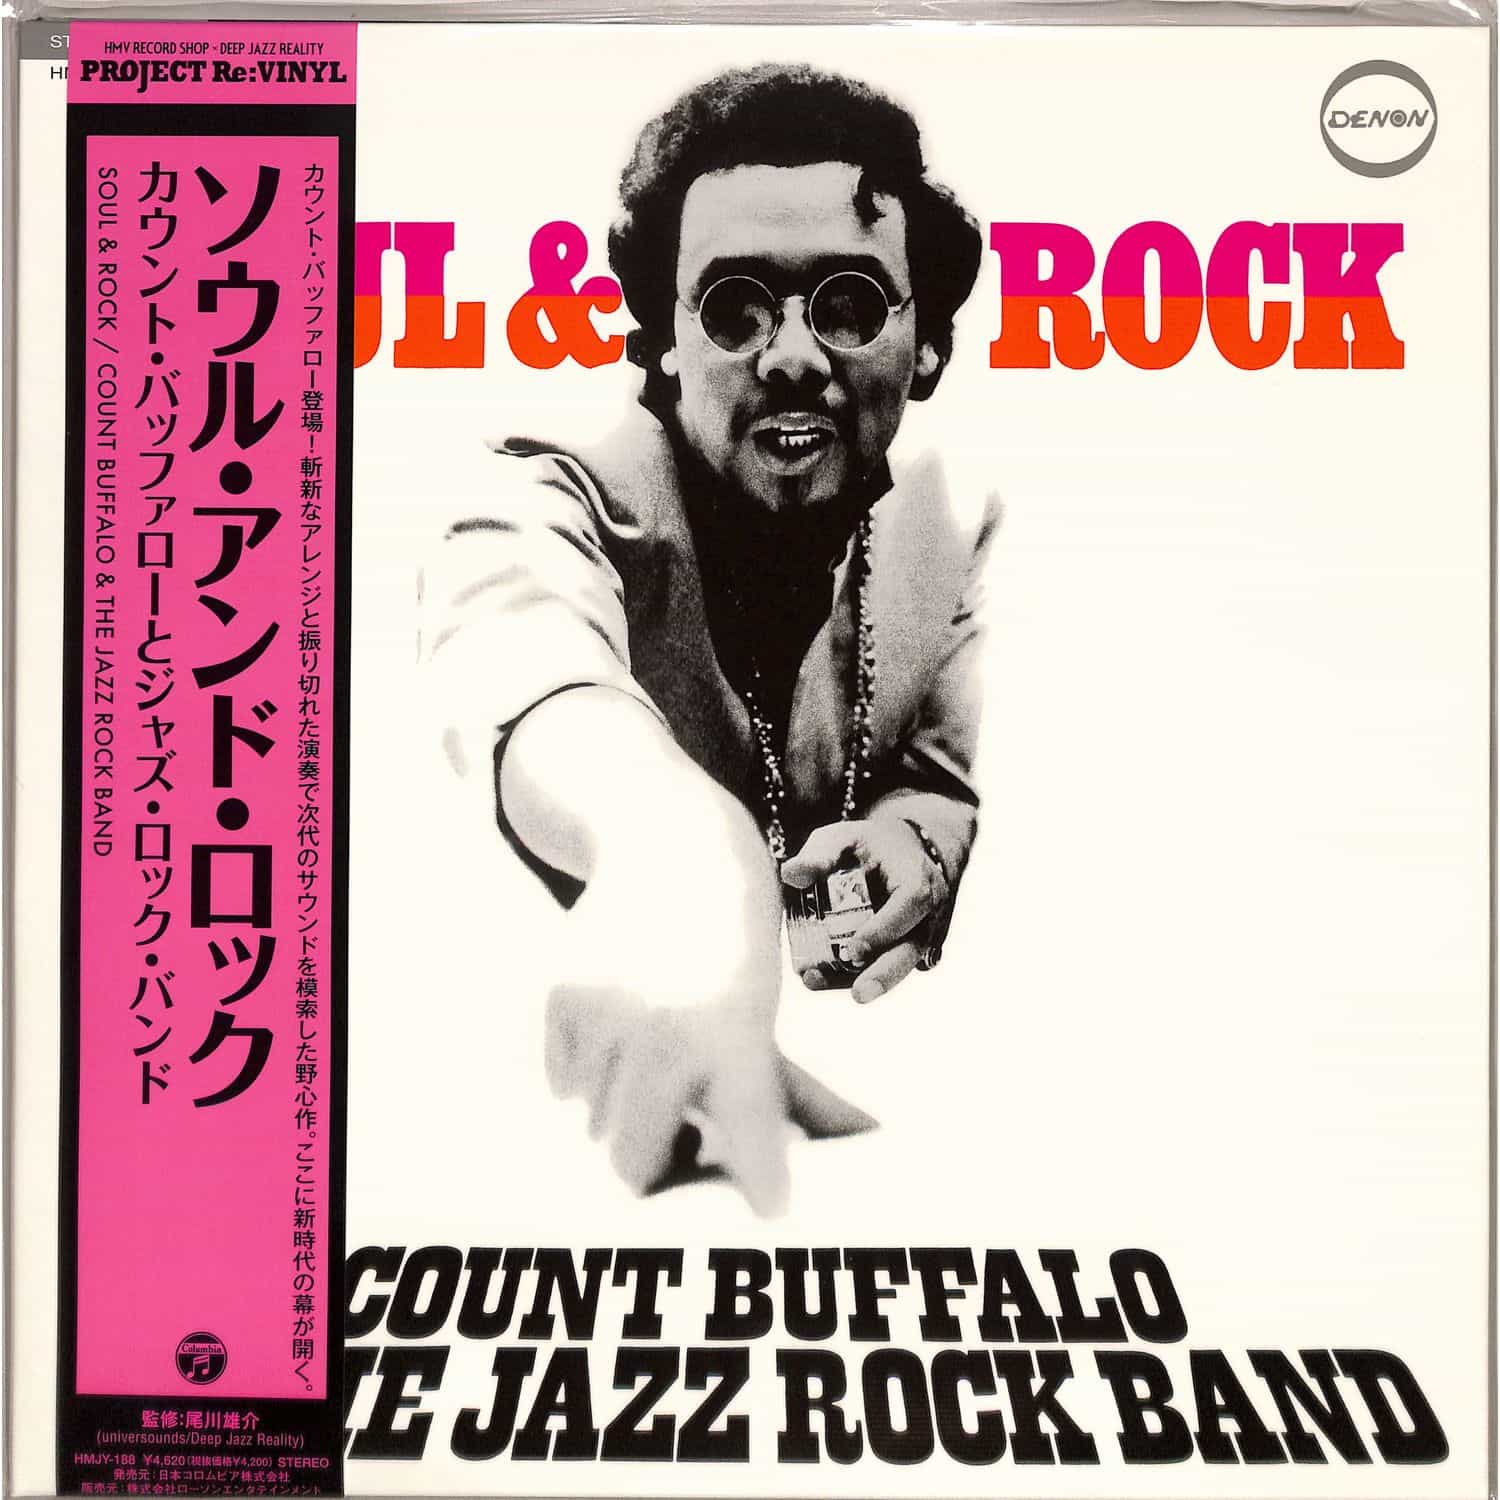 Count Buffalo & The Jazz Rock Band - SOUL & ROCK 